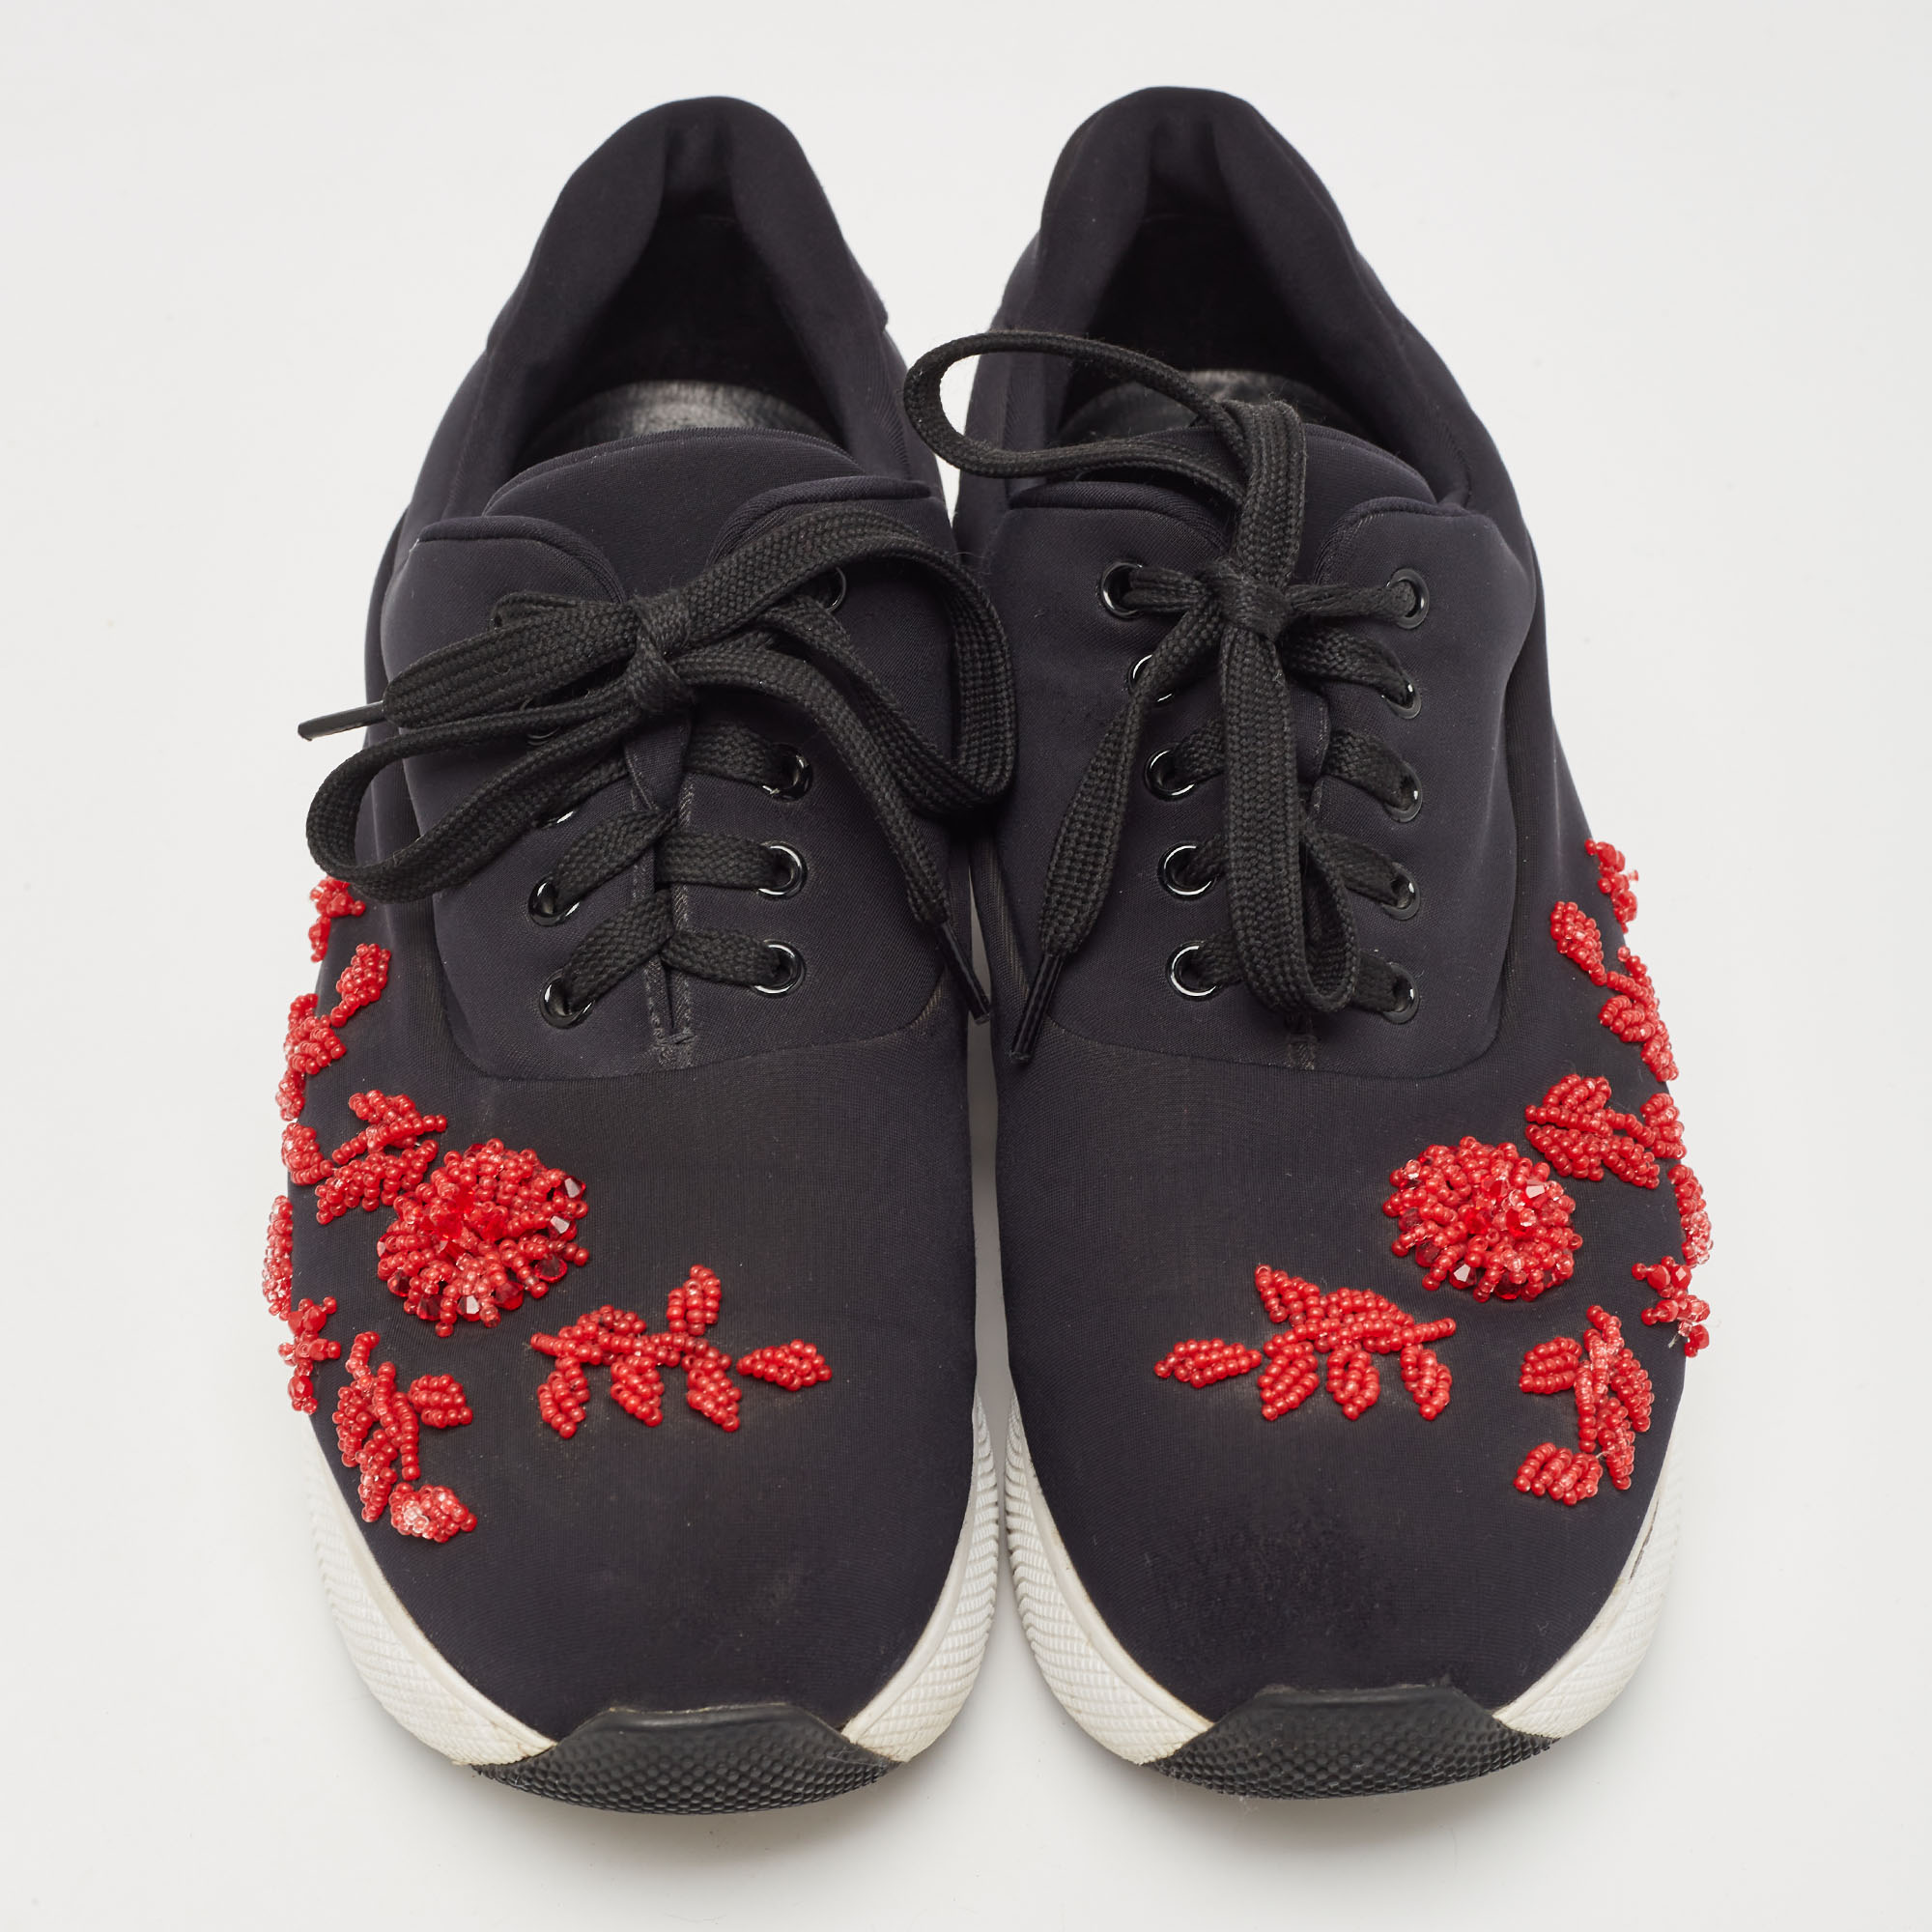 Prada Black Nylon Embellished Low Top Sneakers Size 39.5